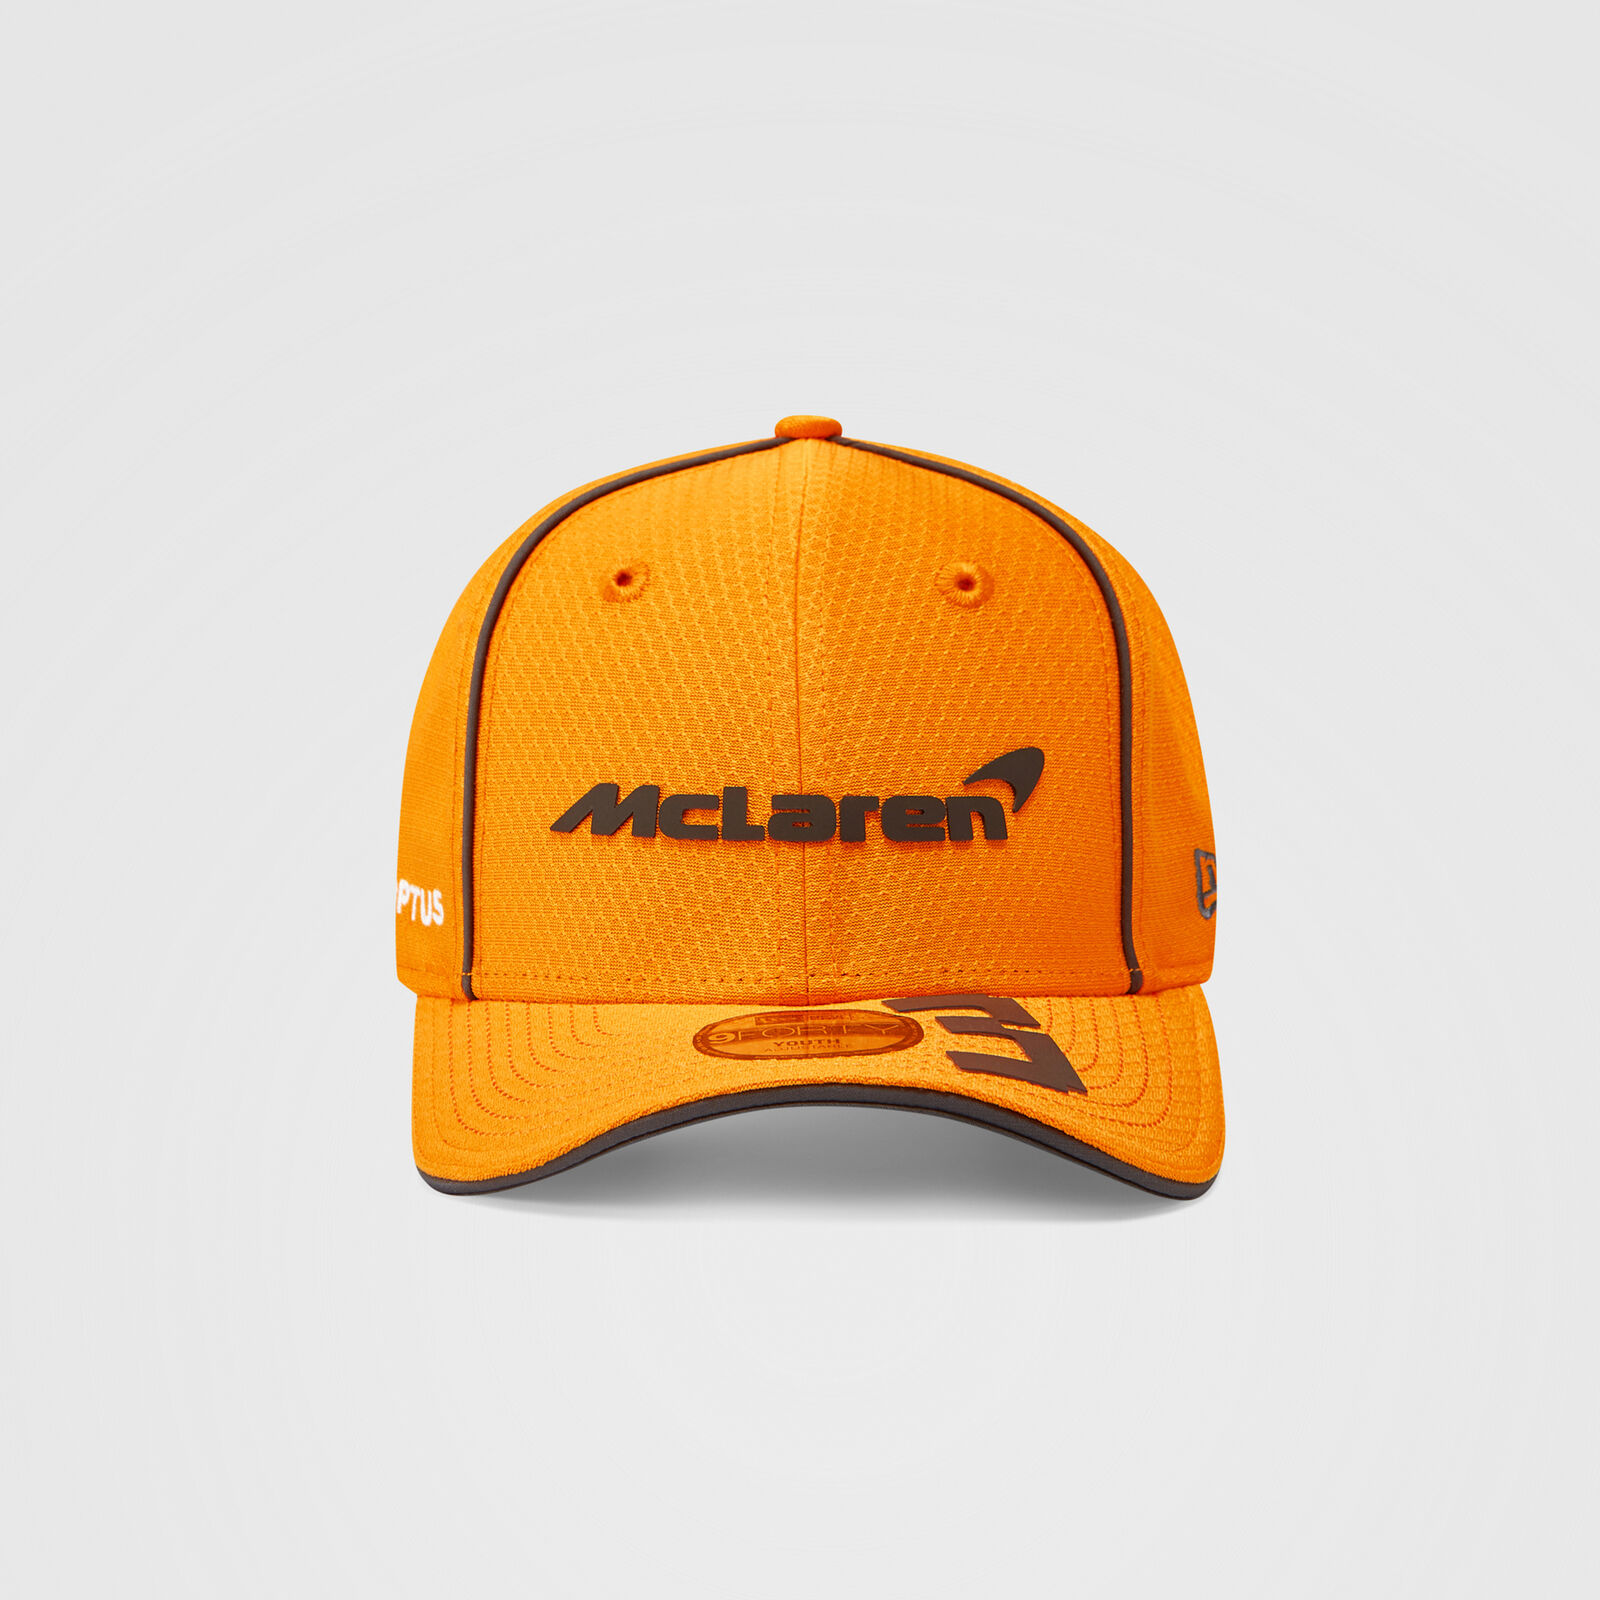 McLaren McLaren F1 Team Ricciardo 2021 adjustable 940 rider cap papaya orange